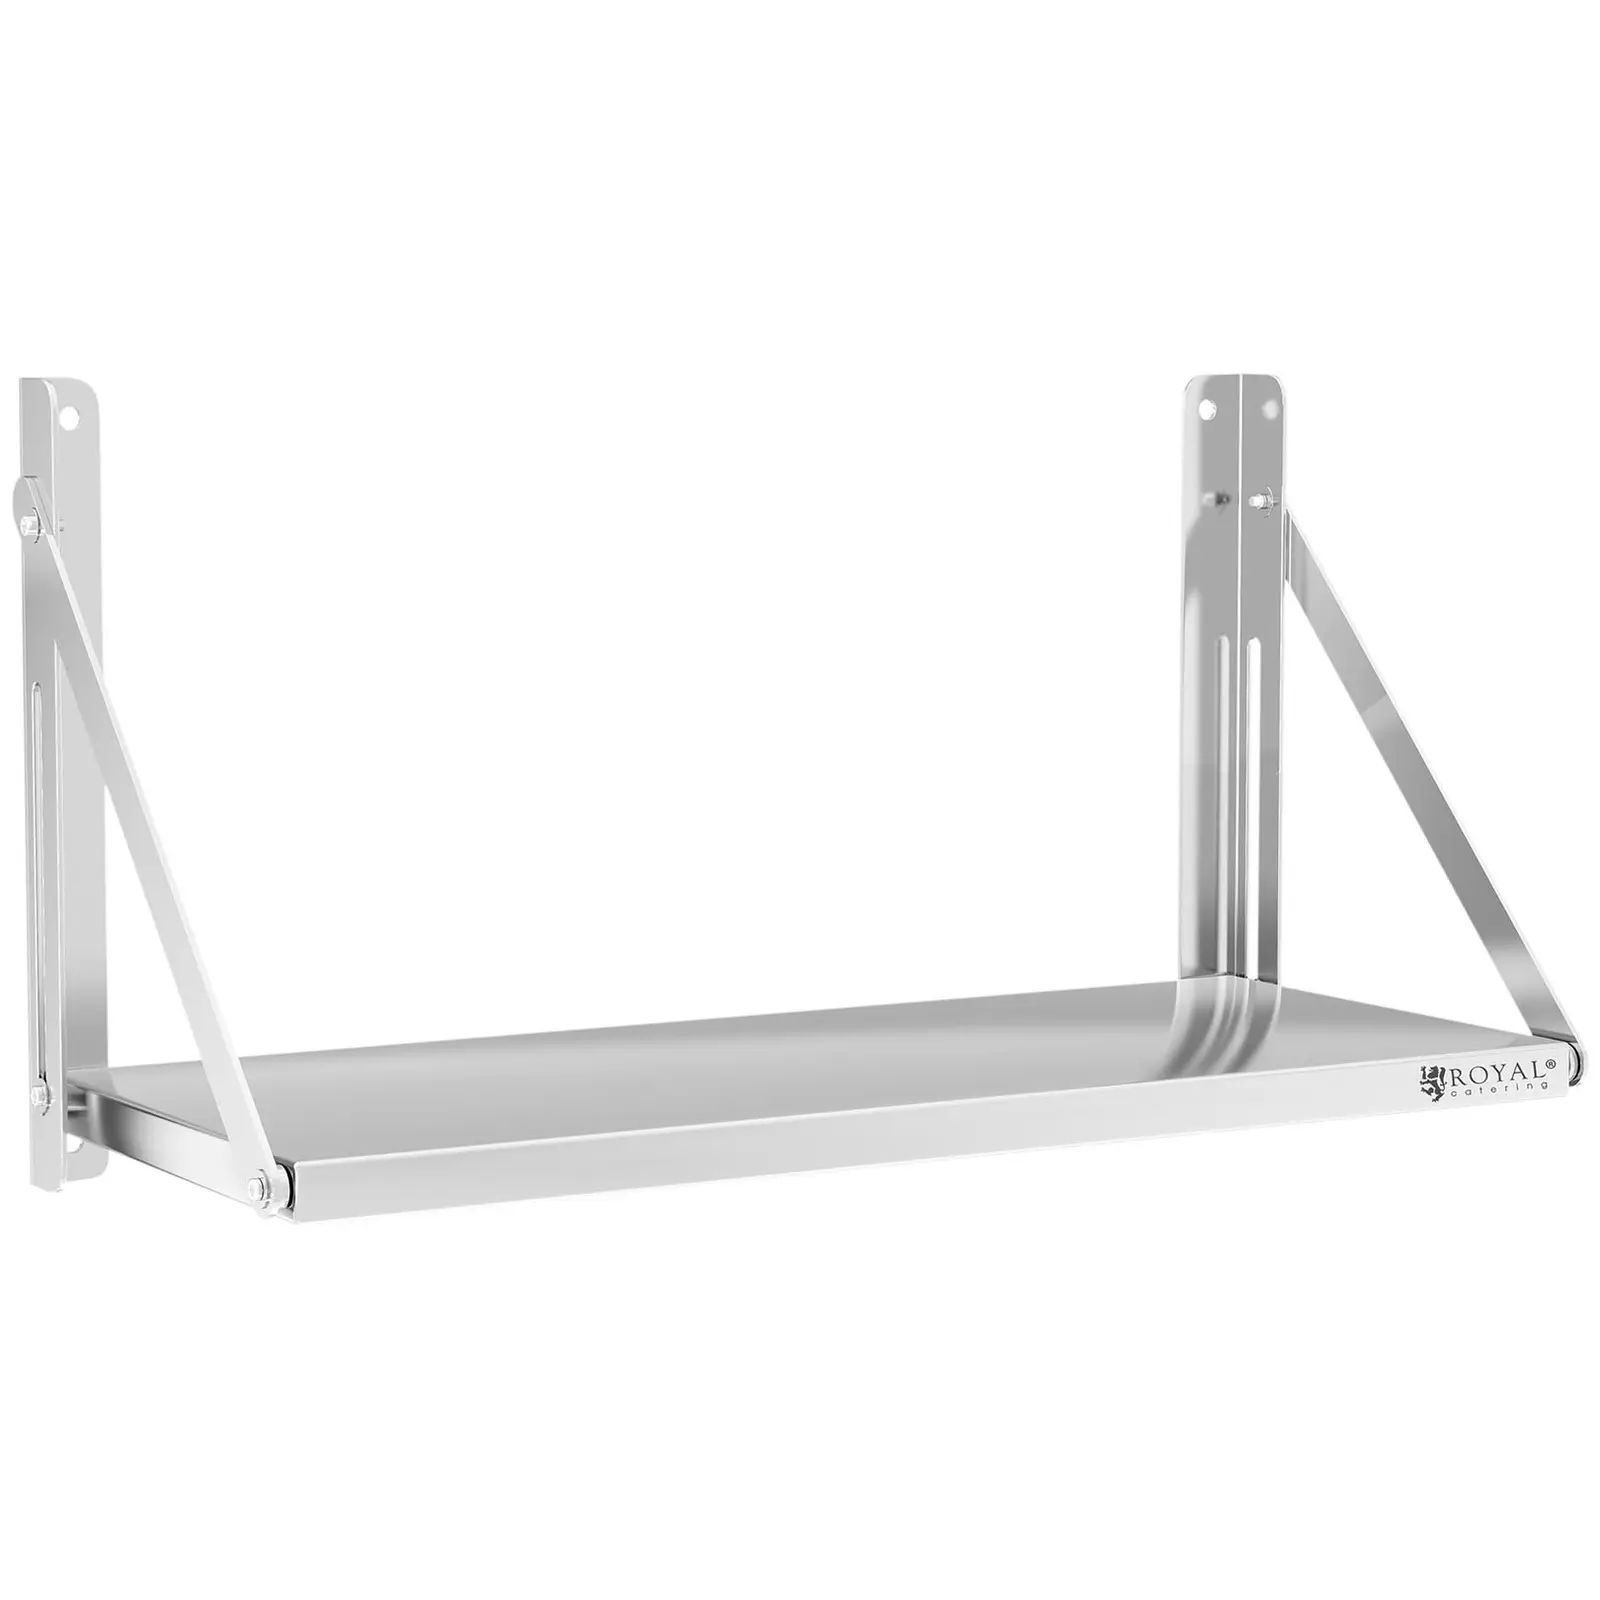 Wall Shelf - foldable - bar design - 80 x 45 cm - 40 kg - stainless steel